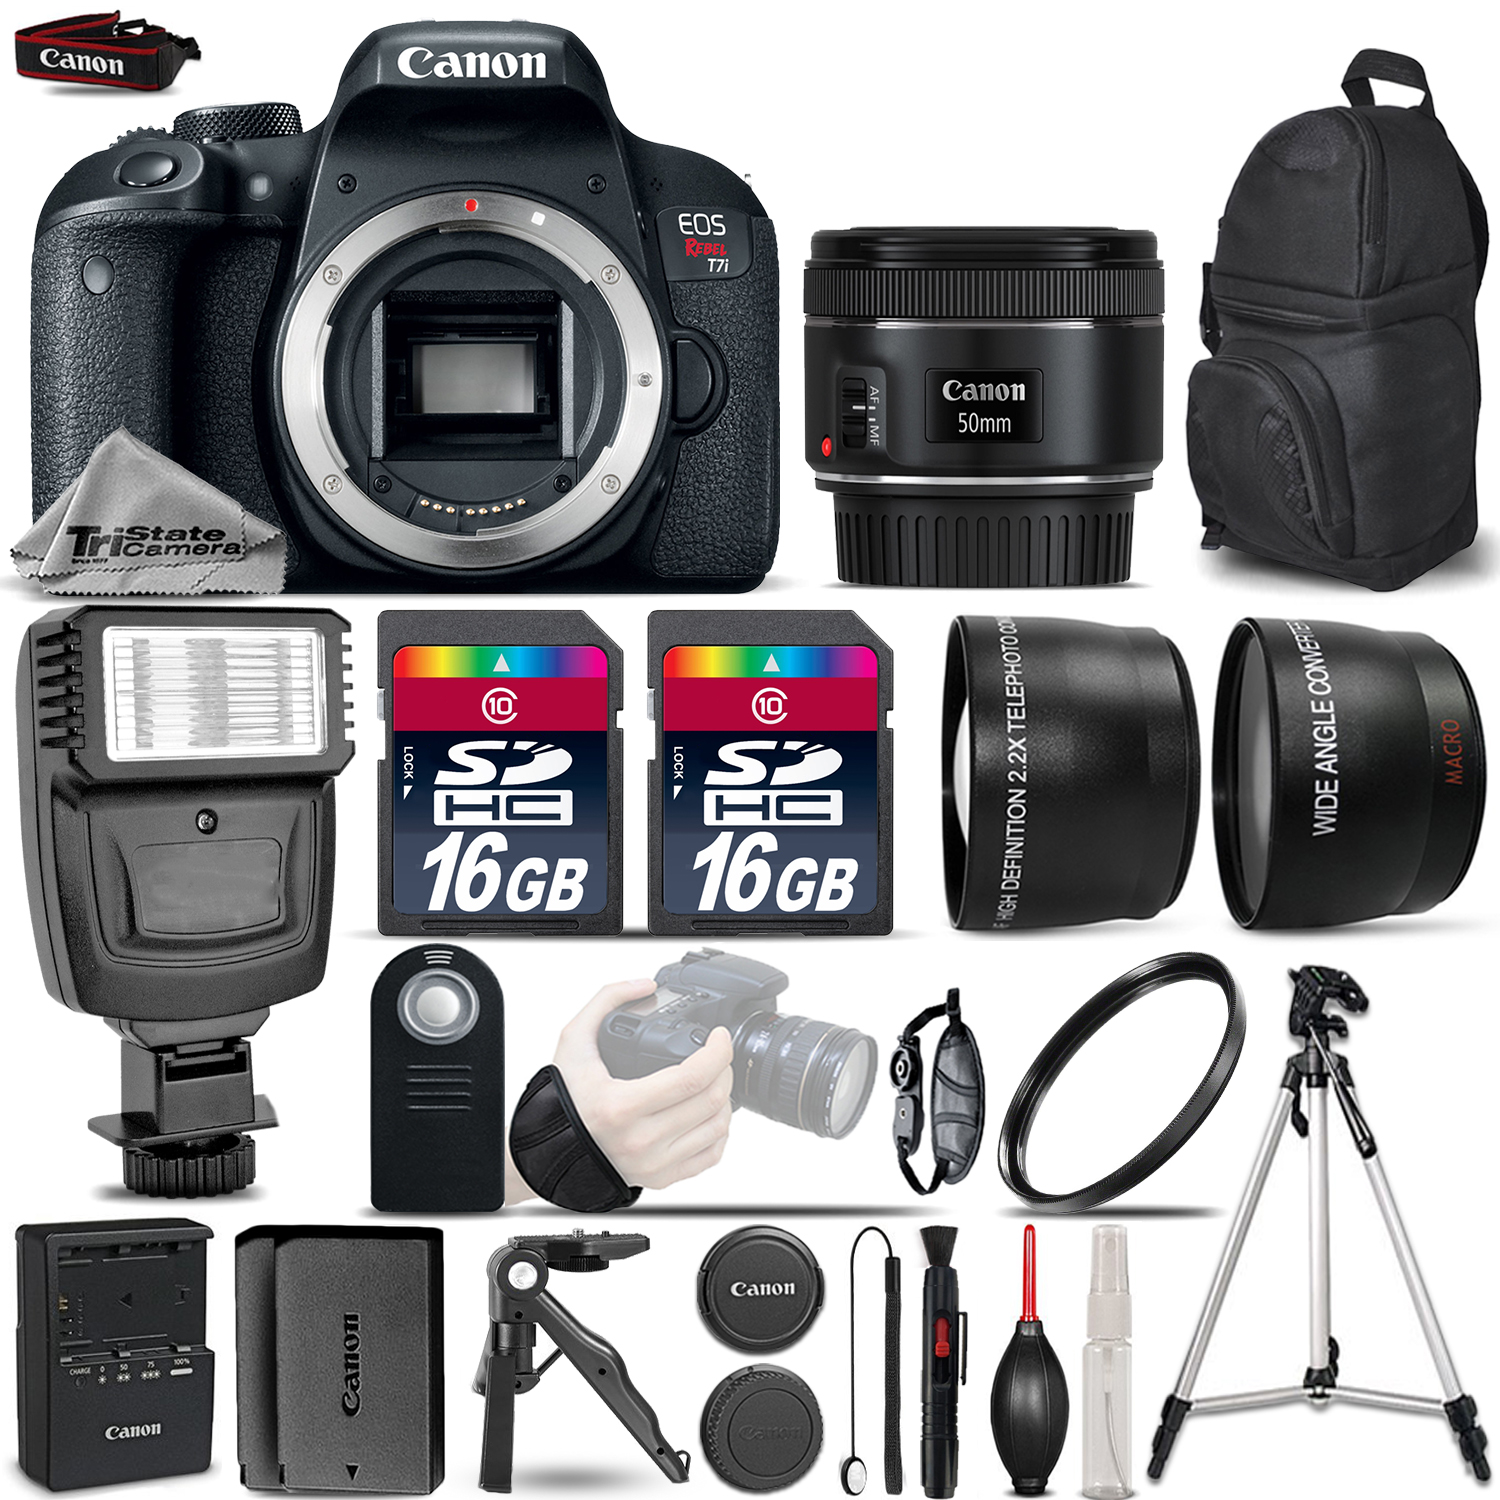 EOS Rebel T7i SLR Camera 800D + 50mm 1.8 STM-3 Lens Kit + Flash + EXT BAT *FREE SHIPPING*